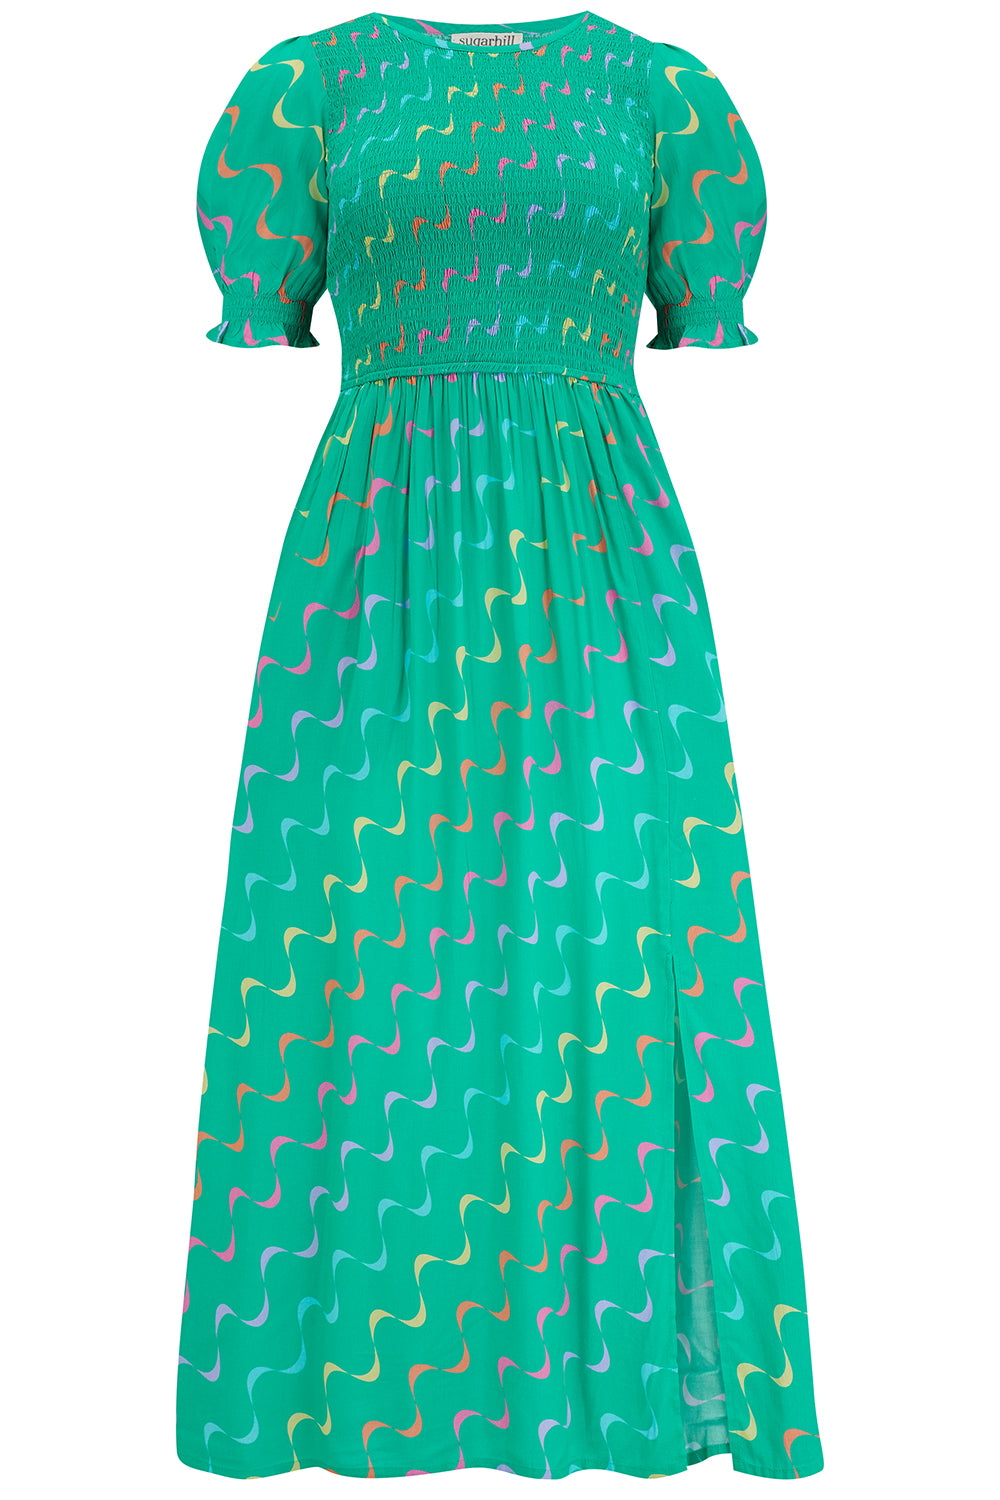 Sugarhill Brighton - Rosita Green Shirred Rainbow Wave Dress